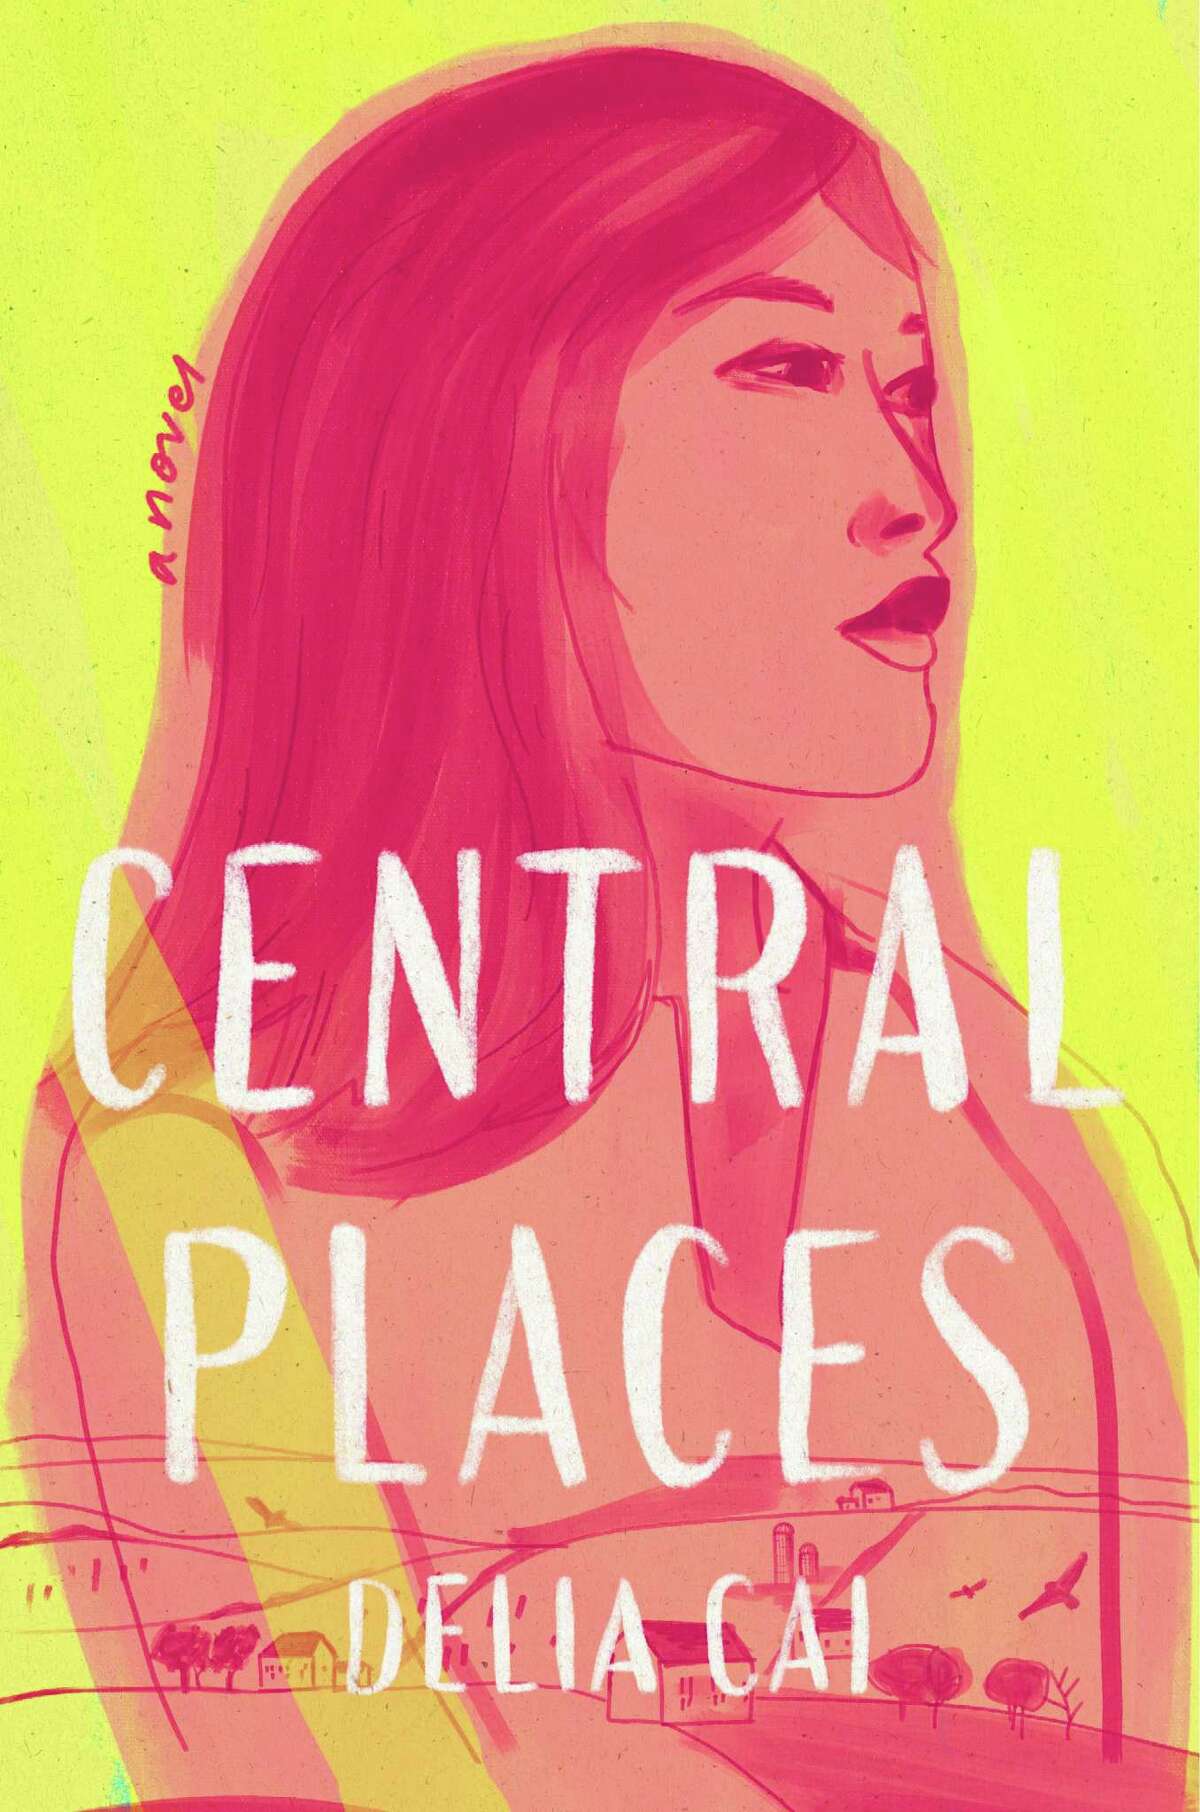 "Central Places" by Delia Cai